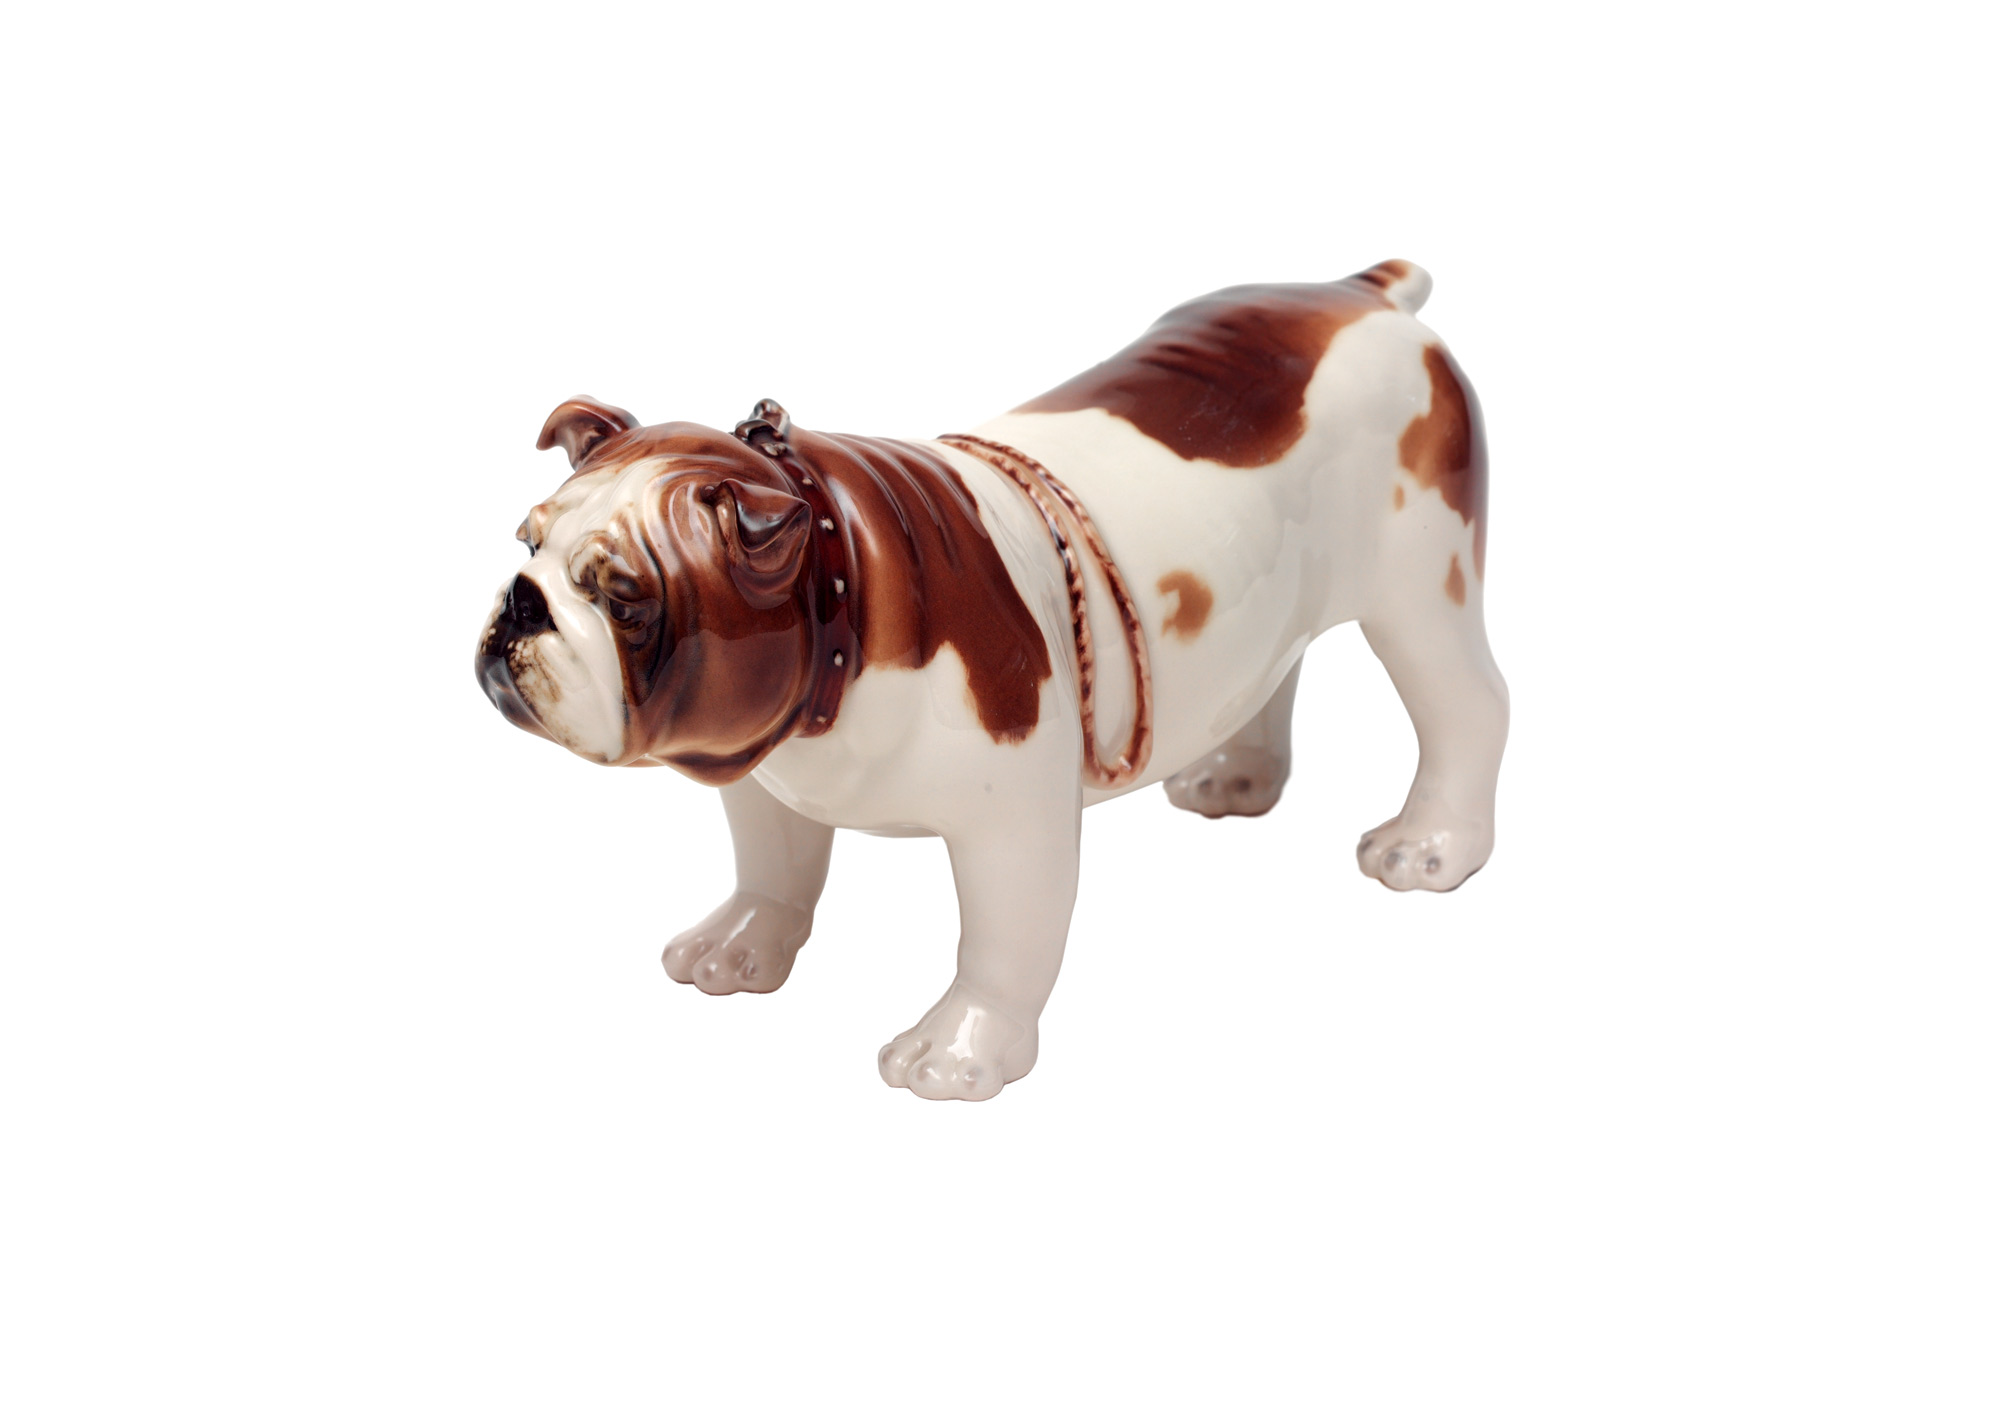 Buy Red & White Bulldog Figurine at GoldenCockerel.com